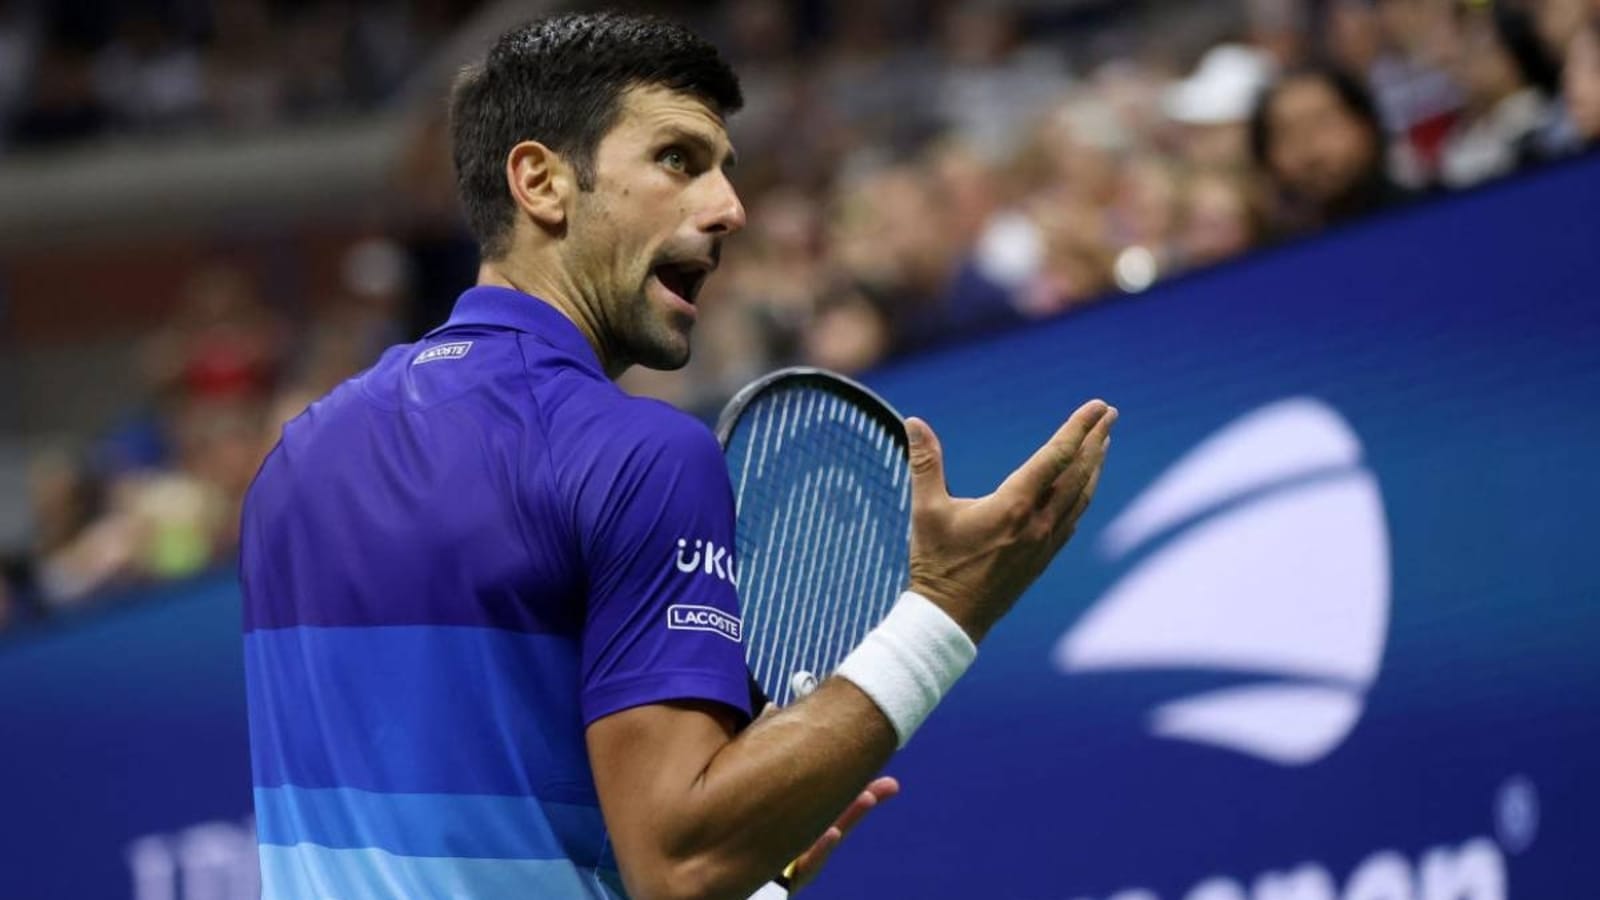 No US Open for Novak Djokovic as organisers won't seek special exemption